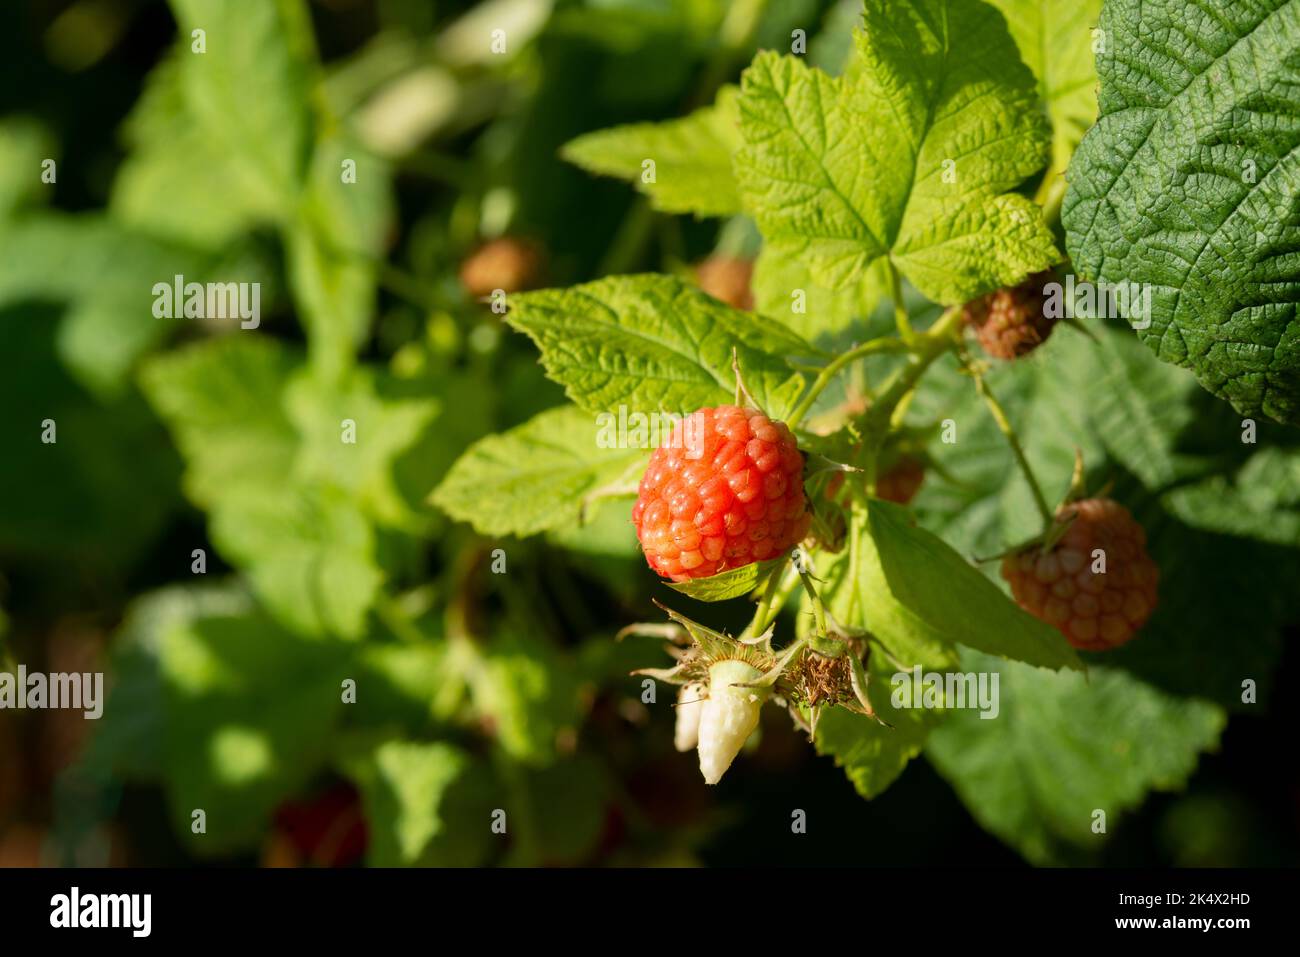 Red Raspberry, Rubus Idaeus Stock Photo